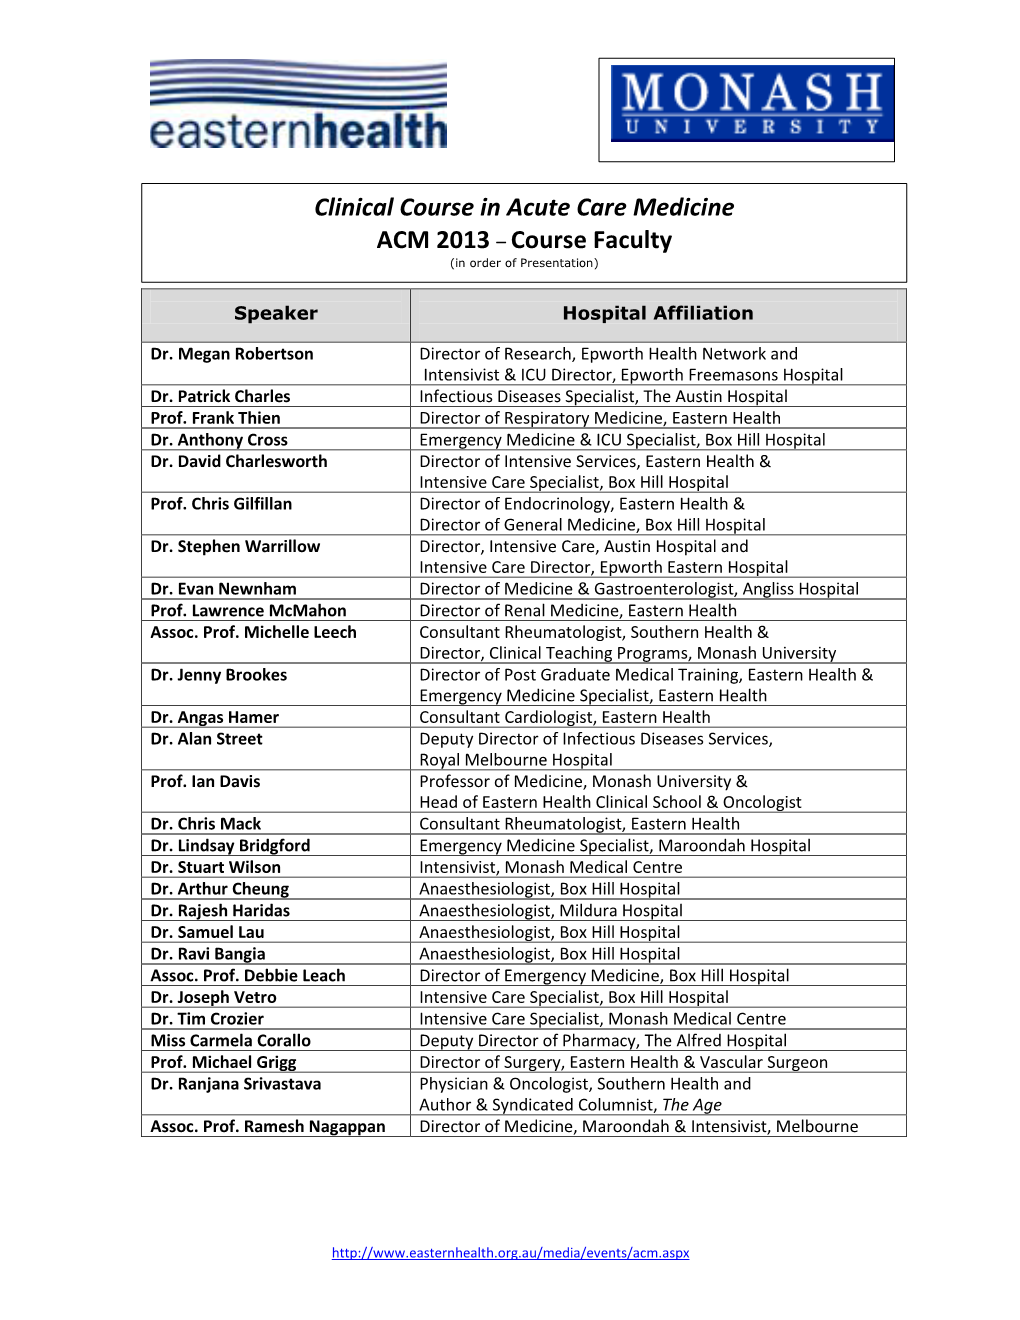 Clinical Course in Acute Care Medicine ACM 2013